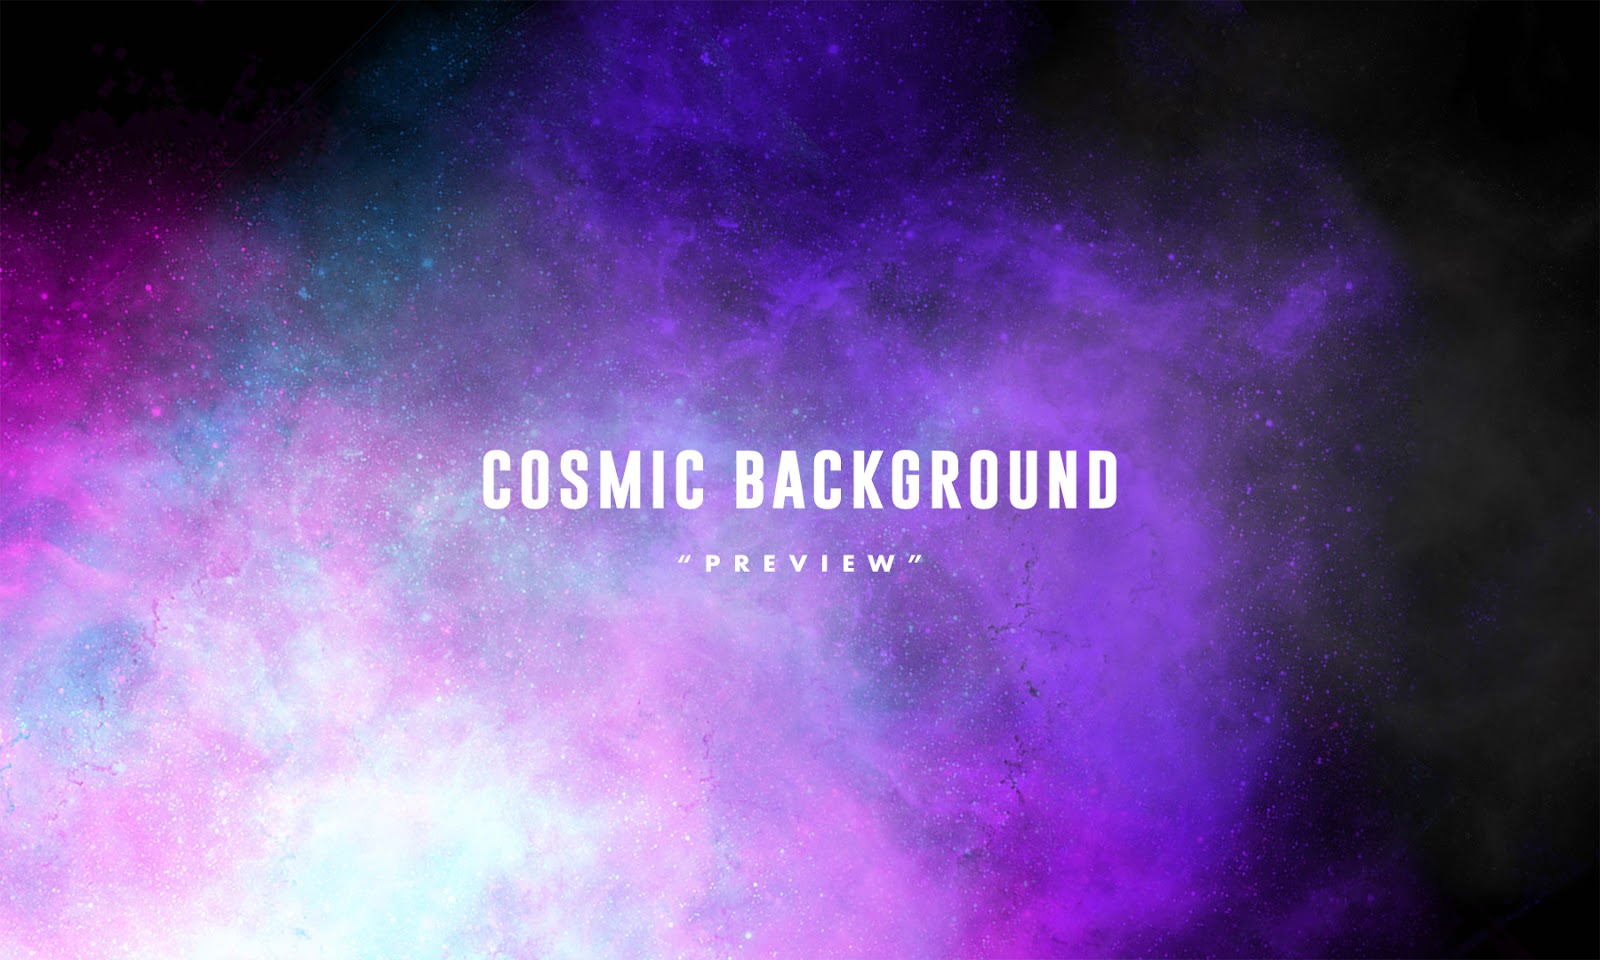 Free Download 3 Cosmic Background - JPG File